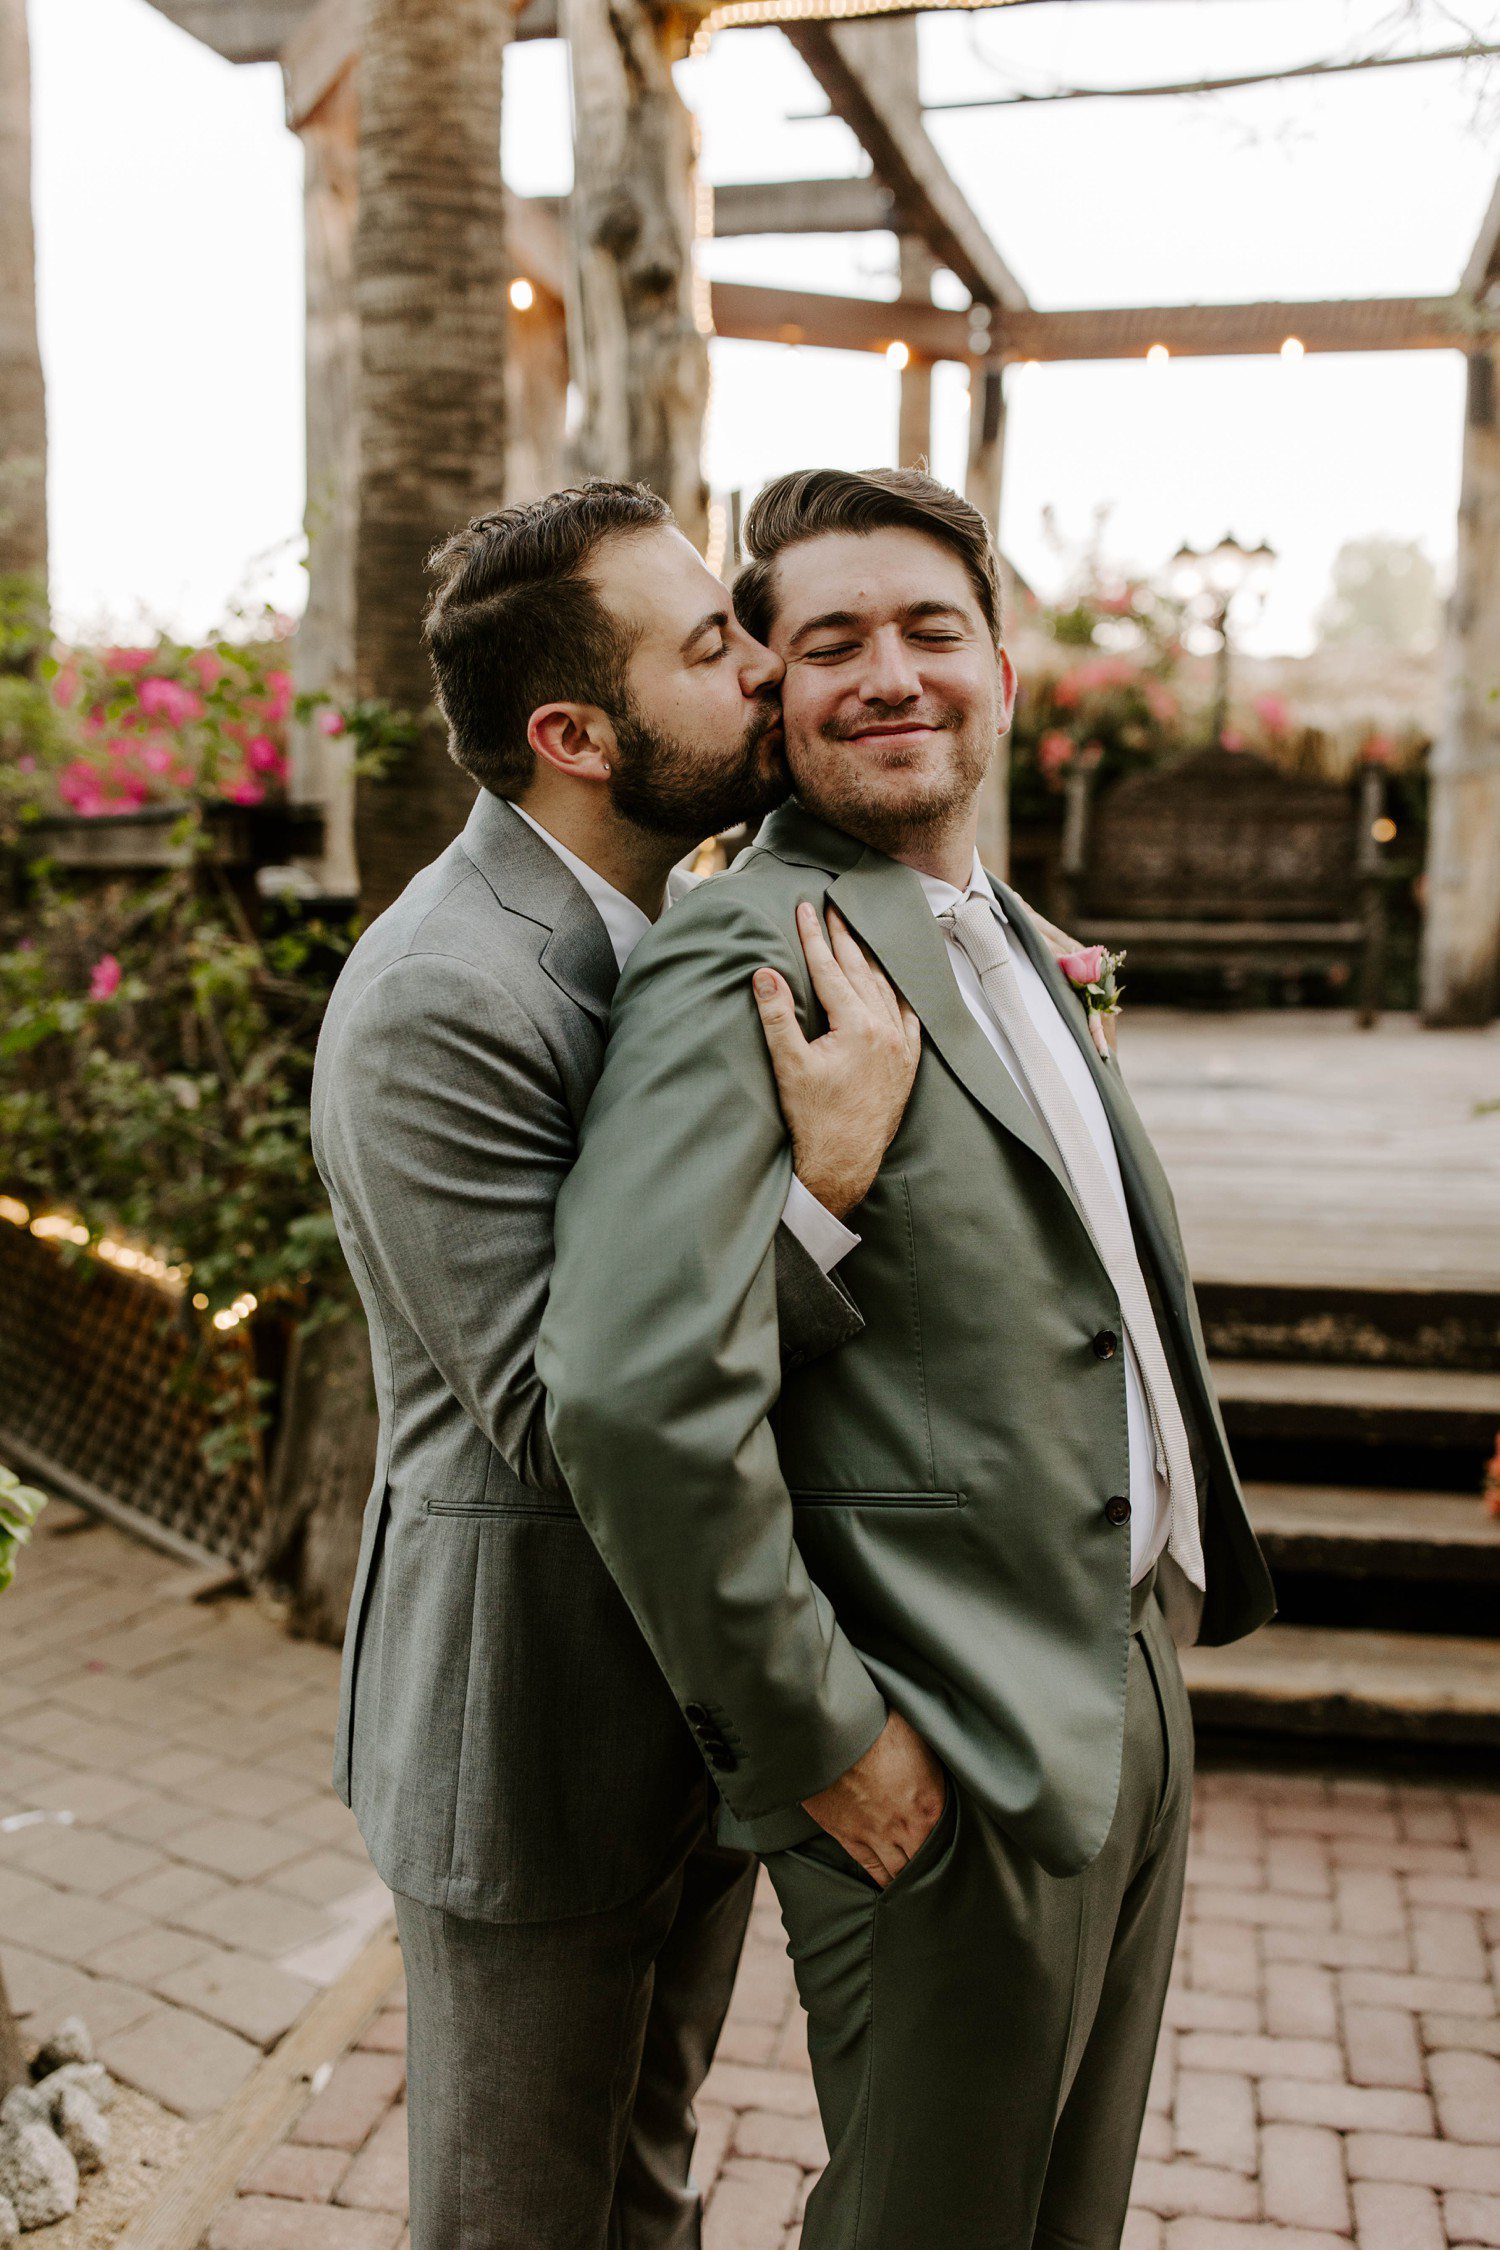 Wedding photos of groom kissing partner on the cheek.